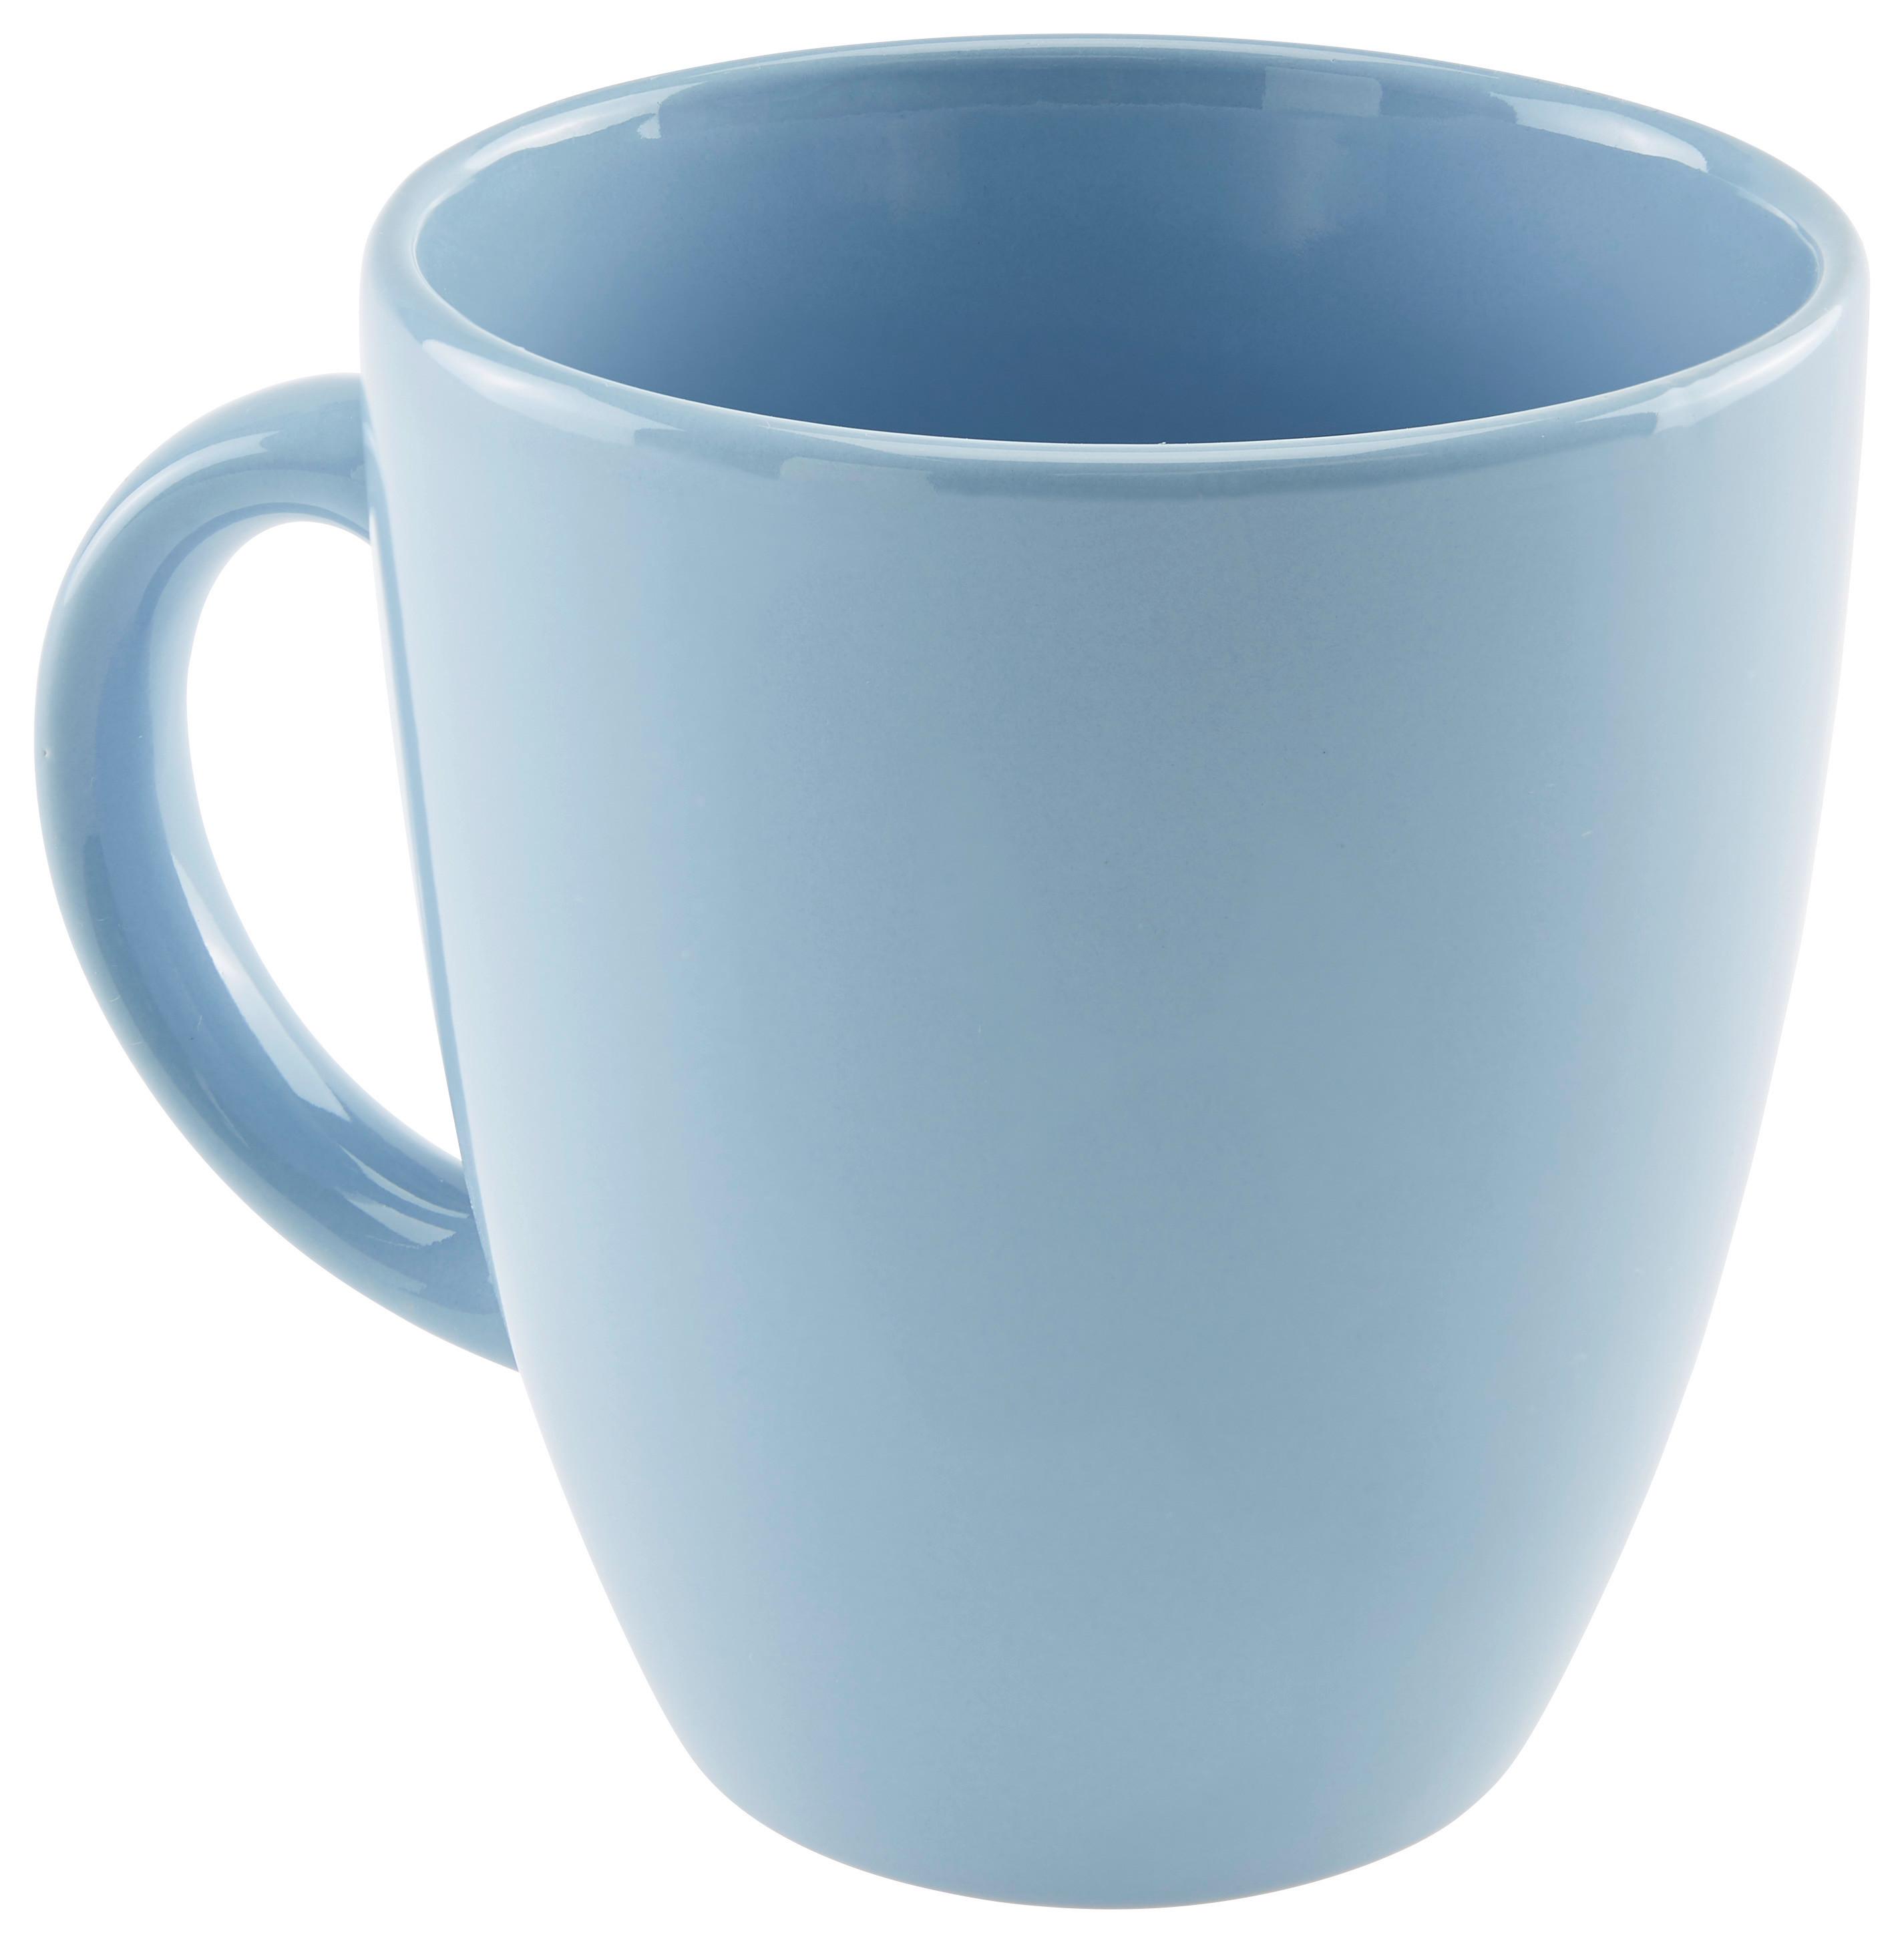 Hellblauer Kaffeebecher aus Keramik